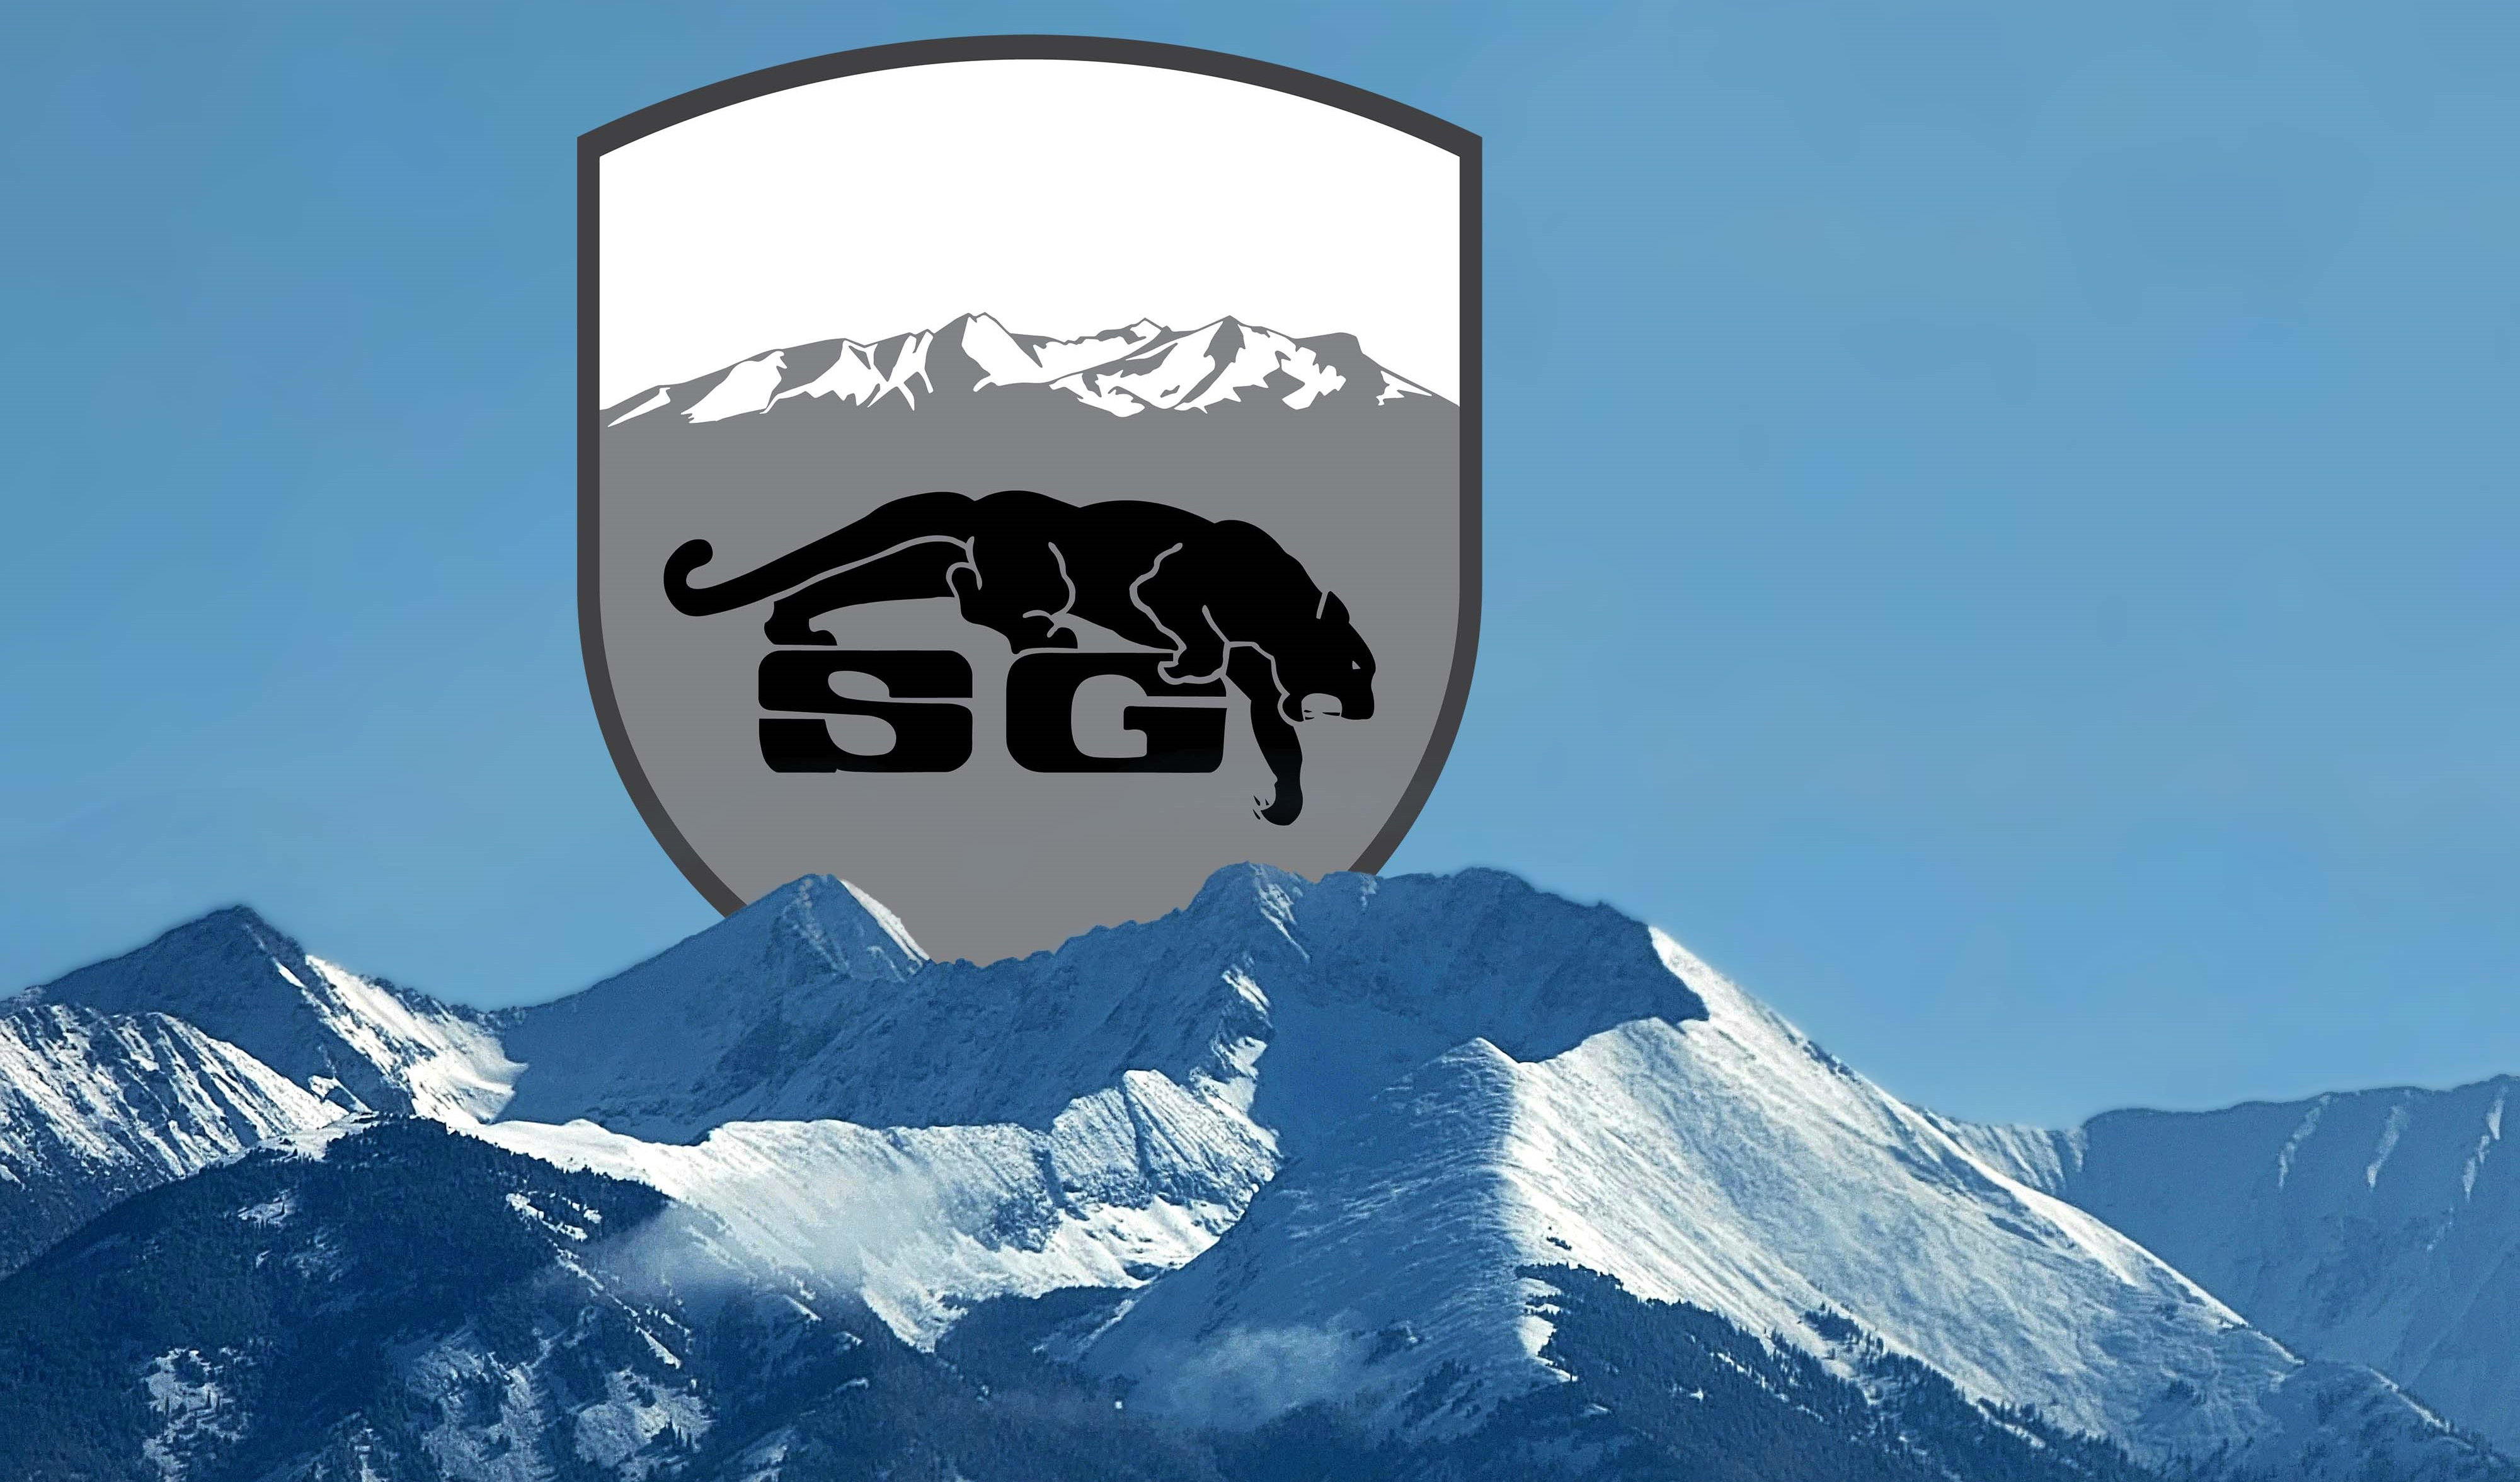 Snow cap mountains with school logo